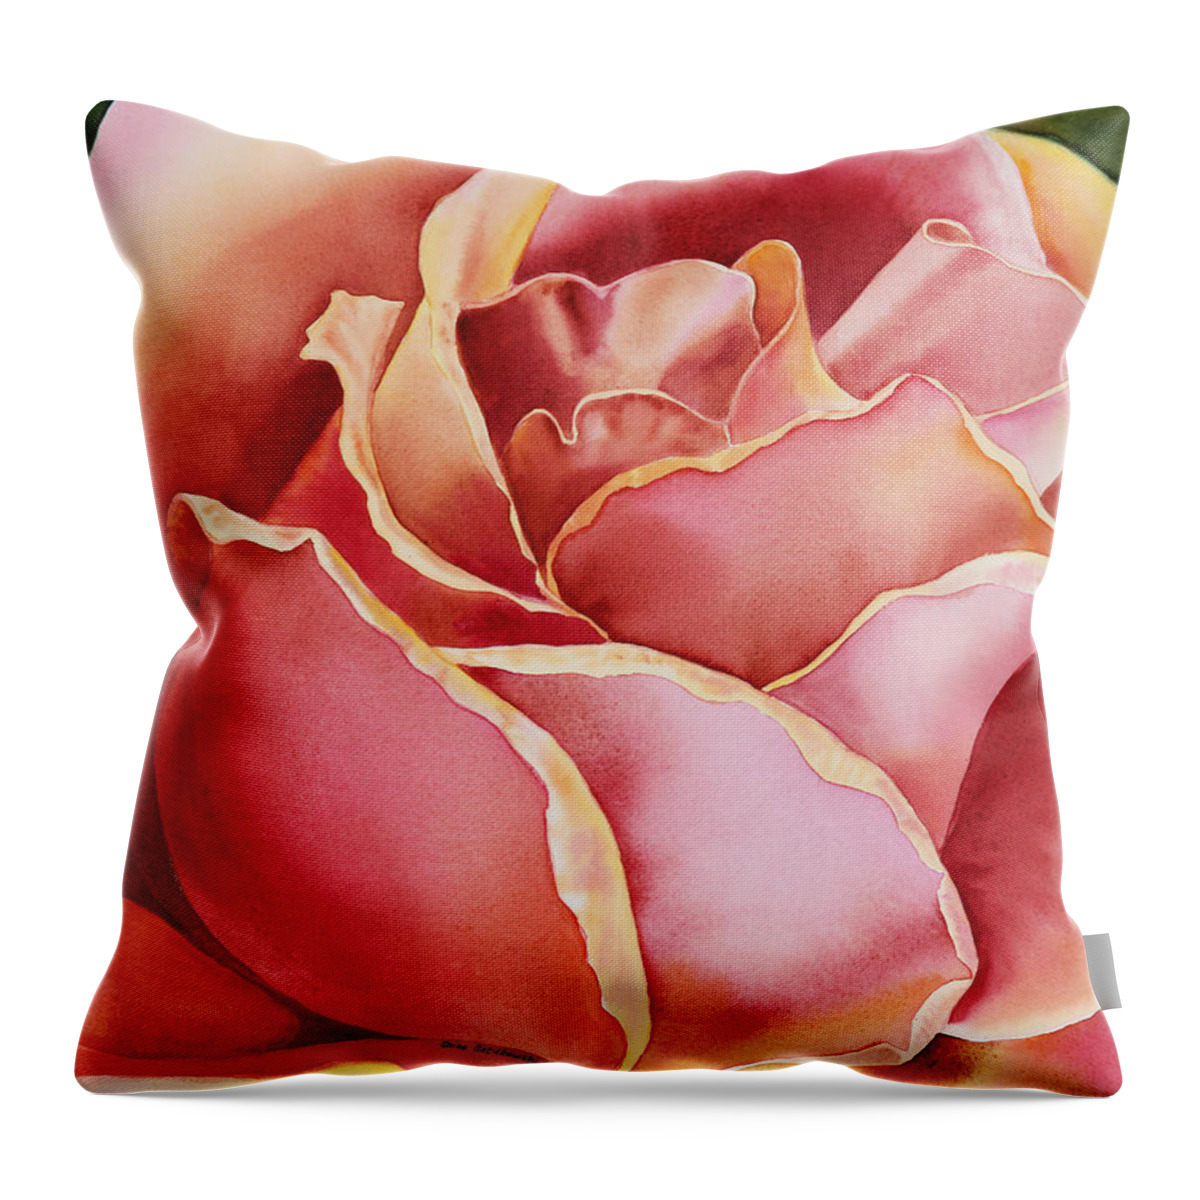 Rose Throw Pillow featuring the painting Rose #1 by Irina Sztukowski